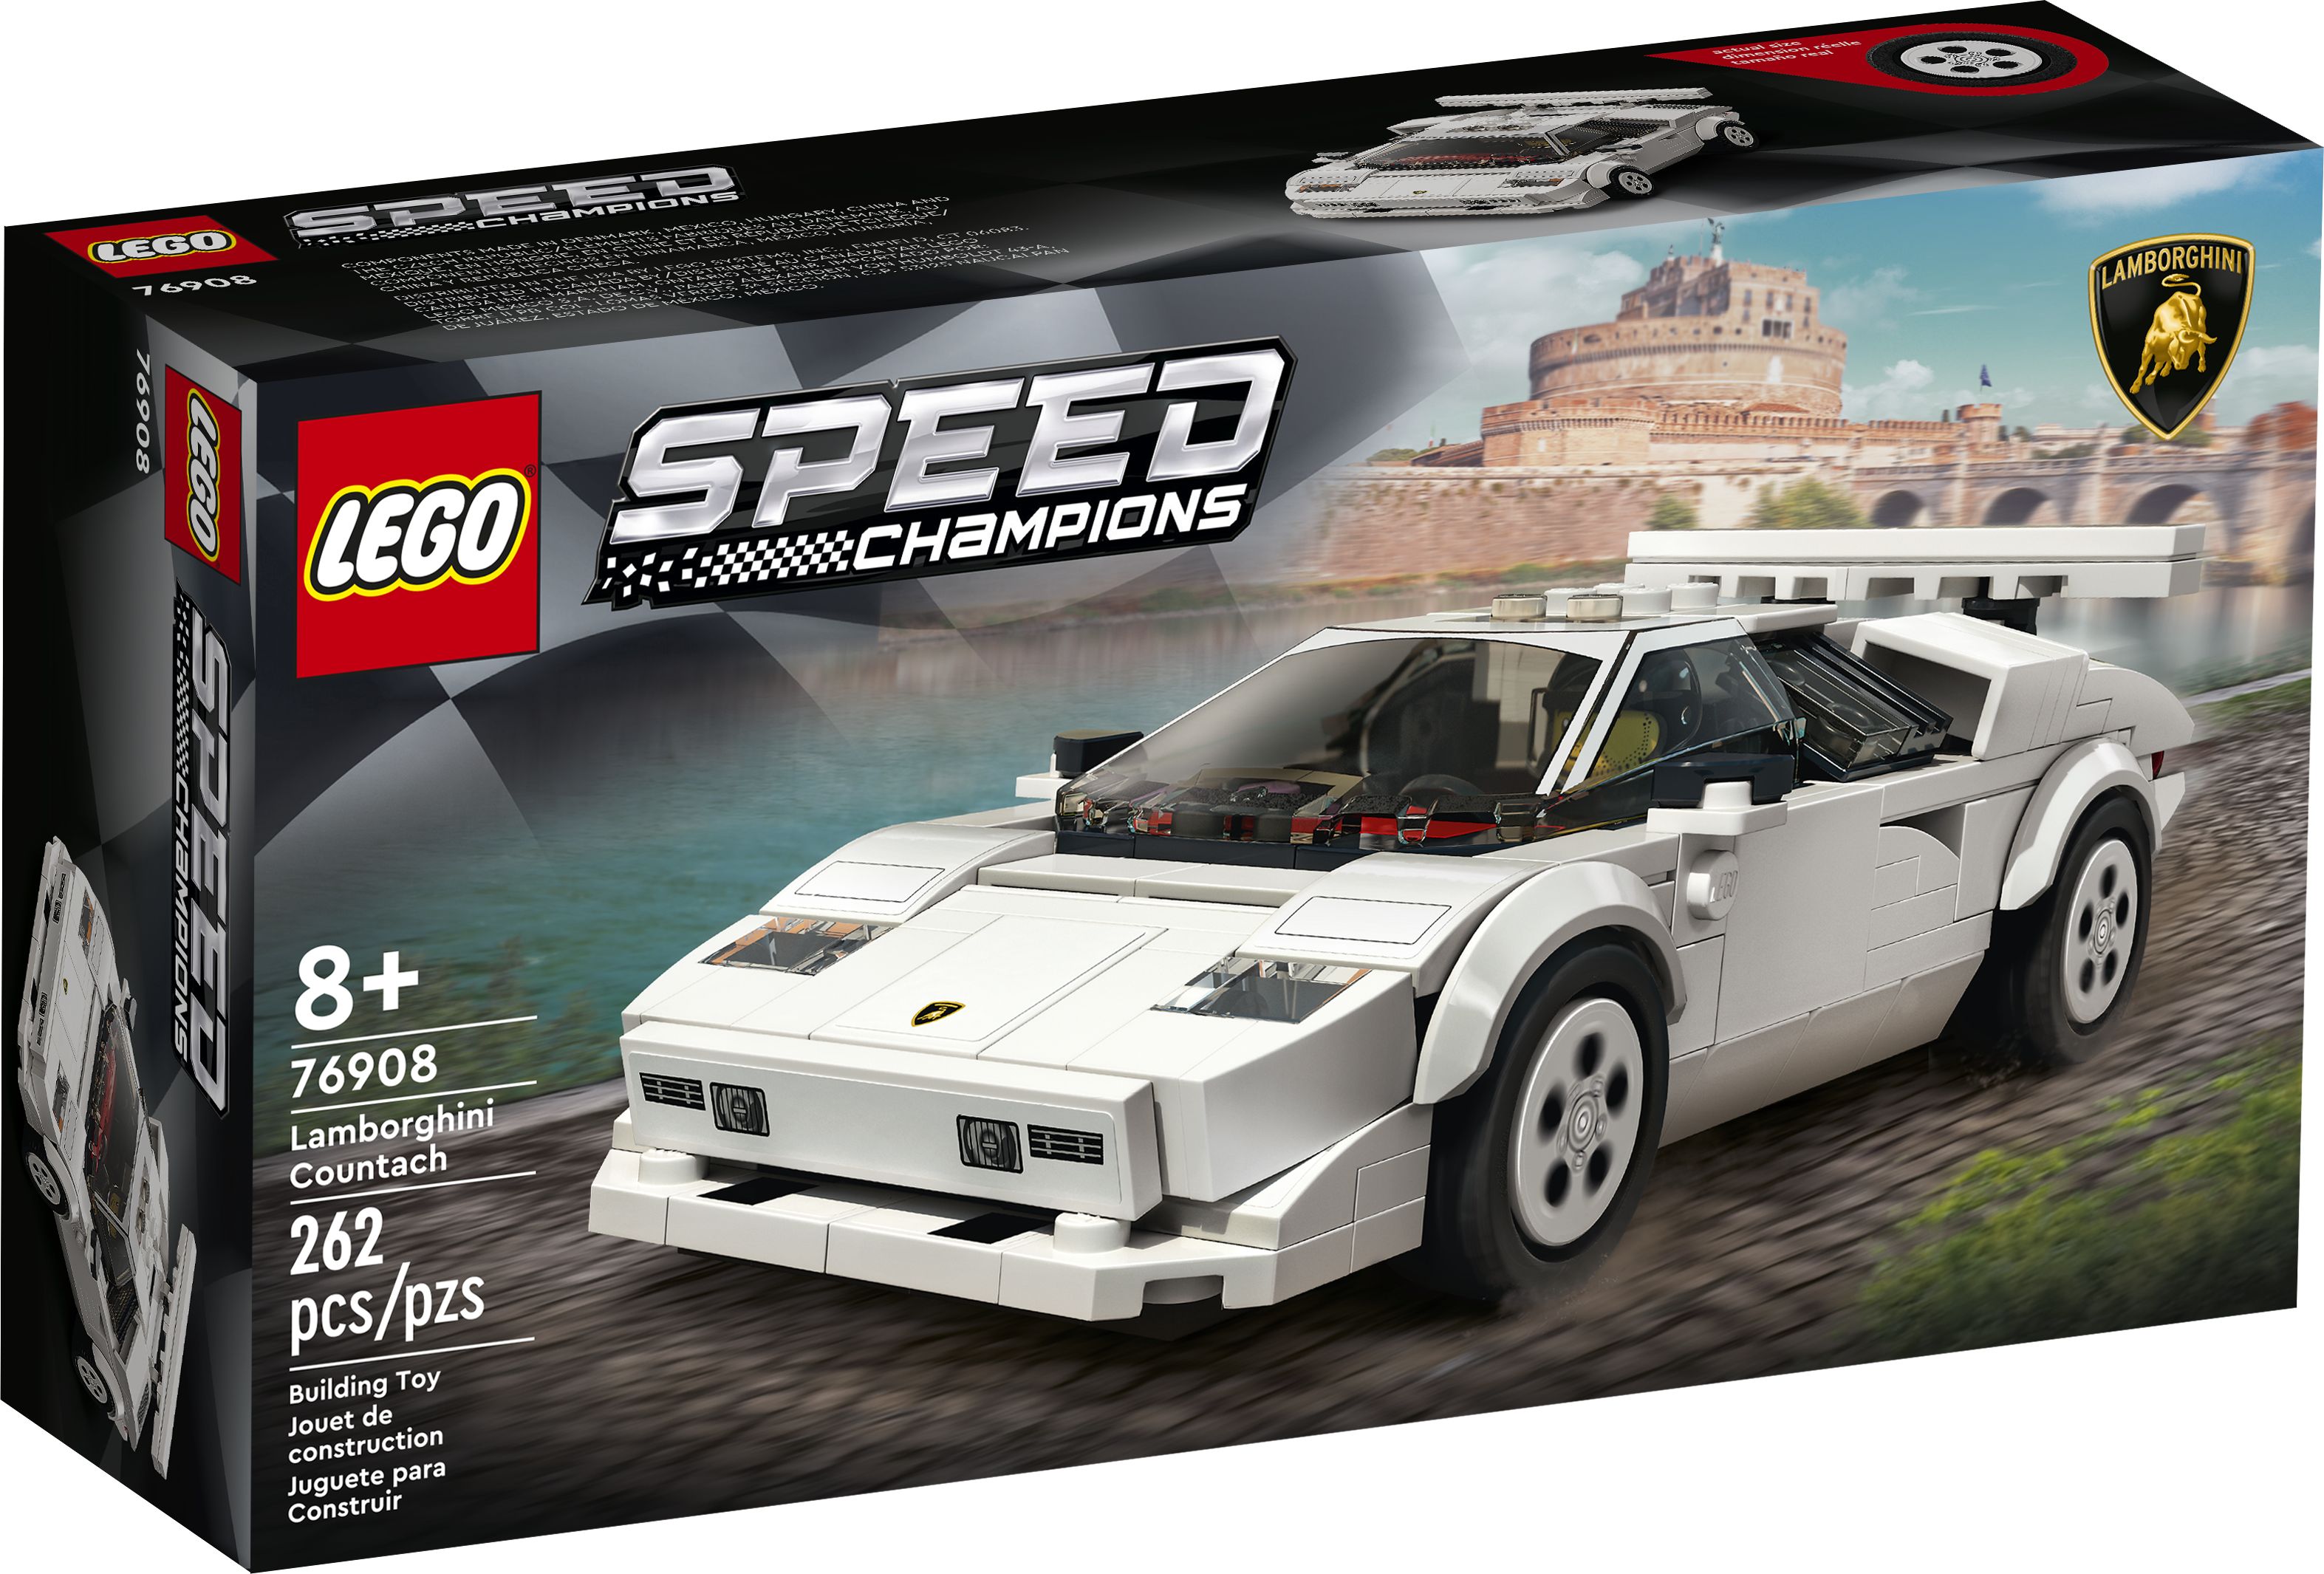 LEGO Speed Champions 76908 Lamborghini Countach LEGO_76908_Box1_v39.jpg